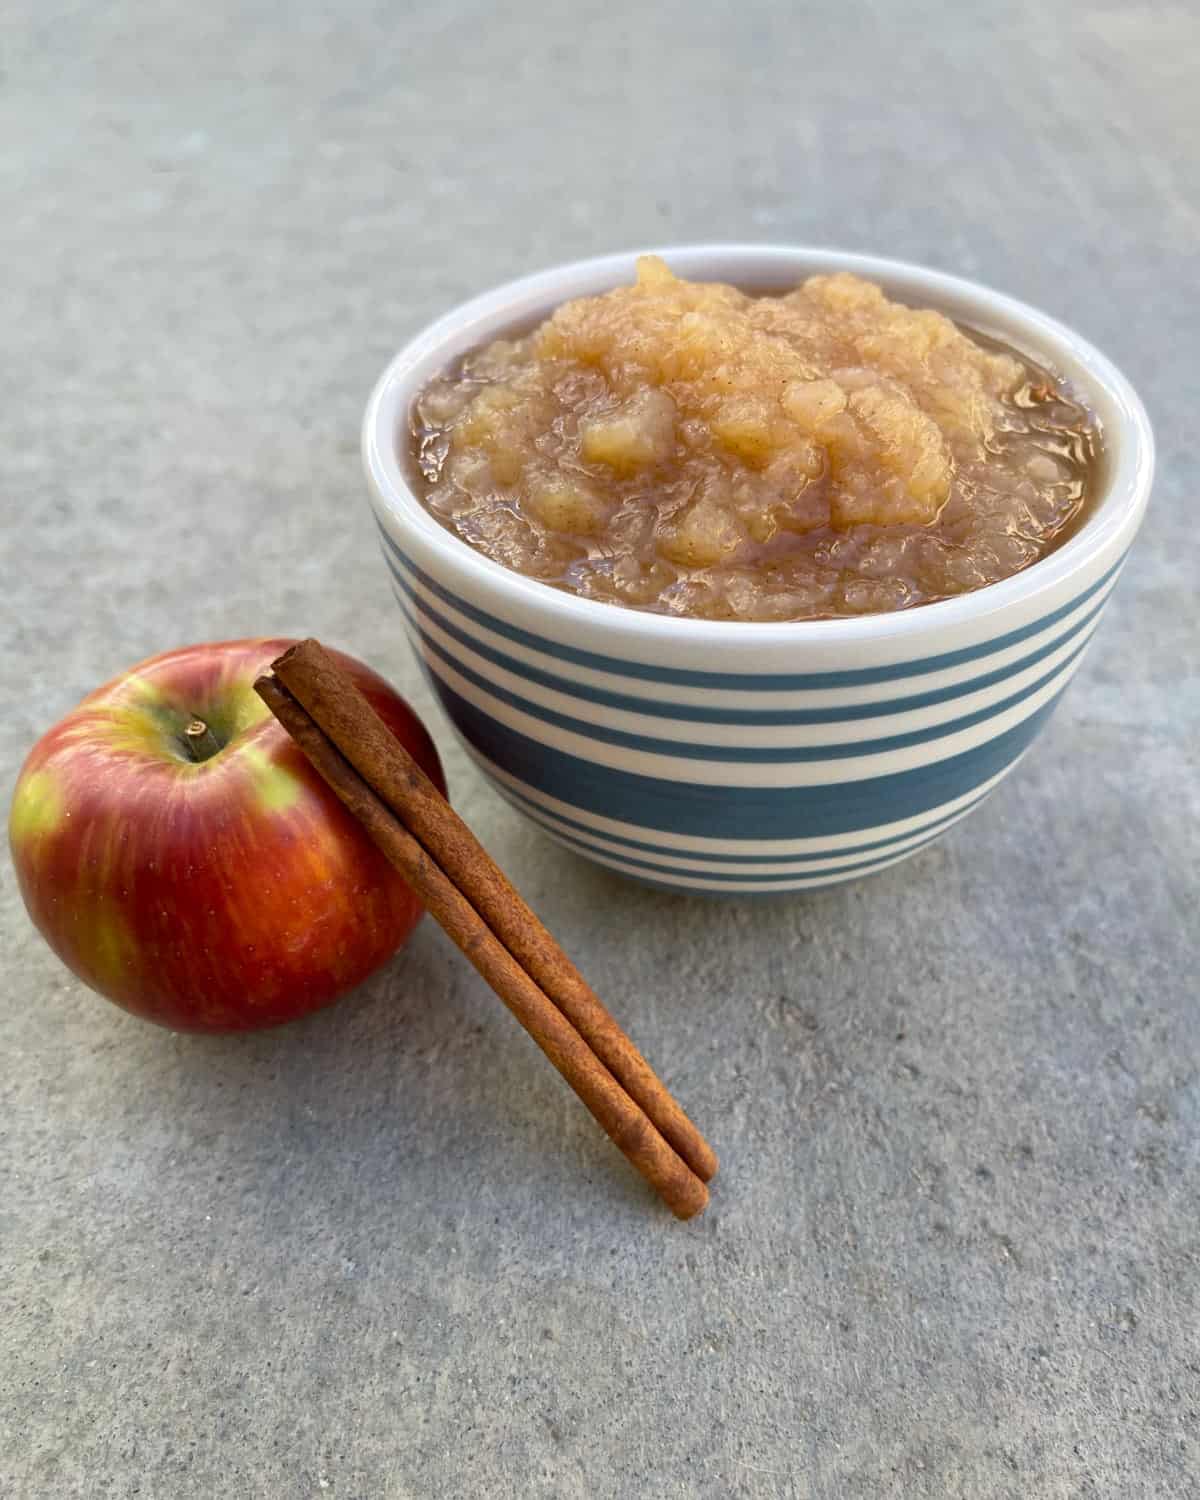 Instant Pot cinnamon applesauce in small bowl near fresh apple and cinnamon stick.